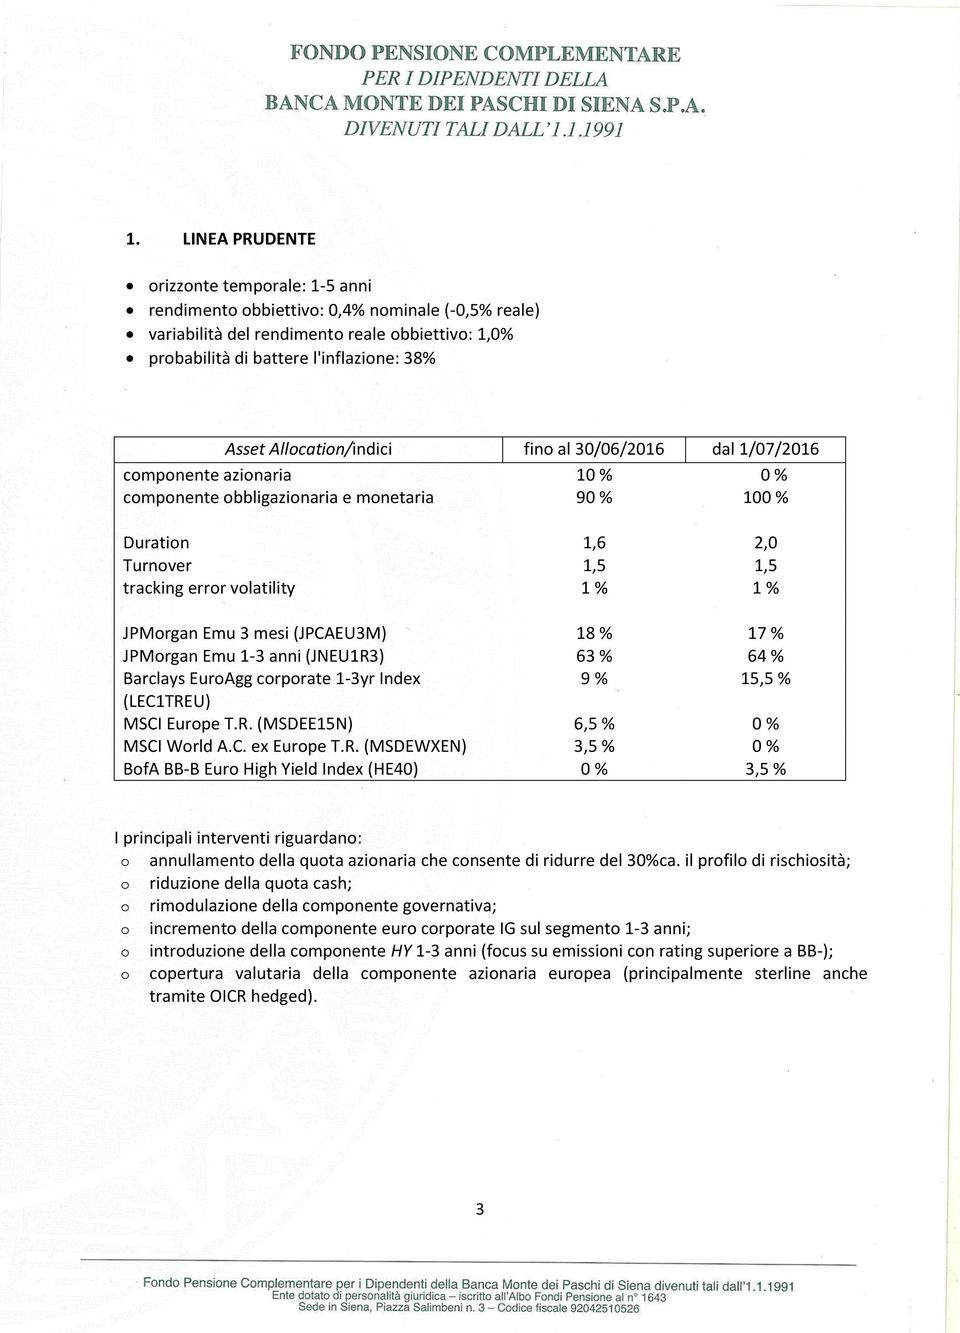 18 % 17 % JPMrgan Emu 1-3 anni (JNEU1R3